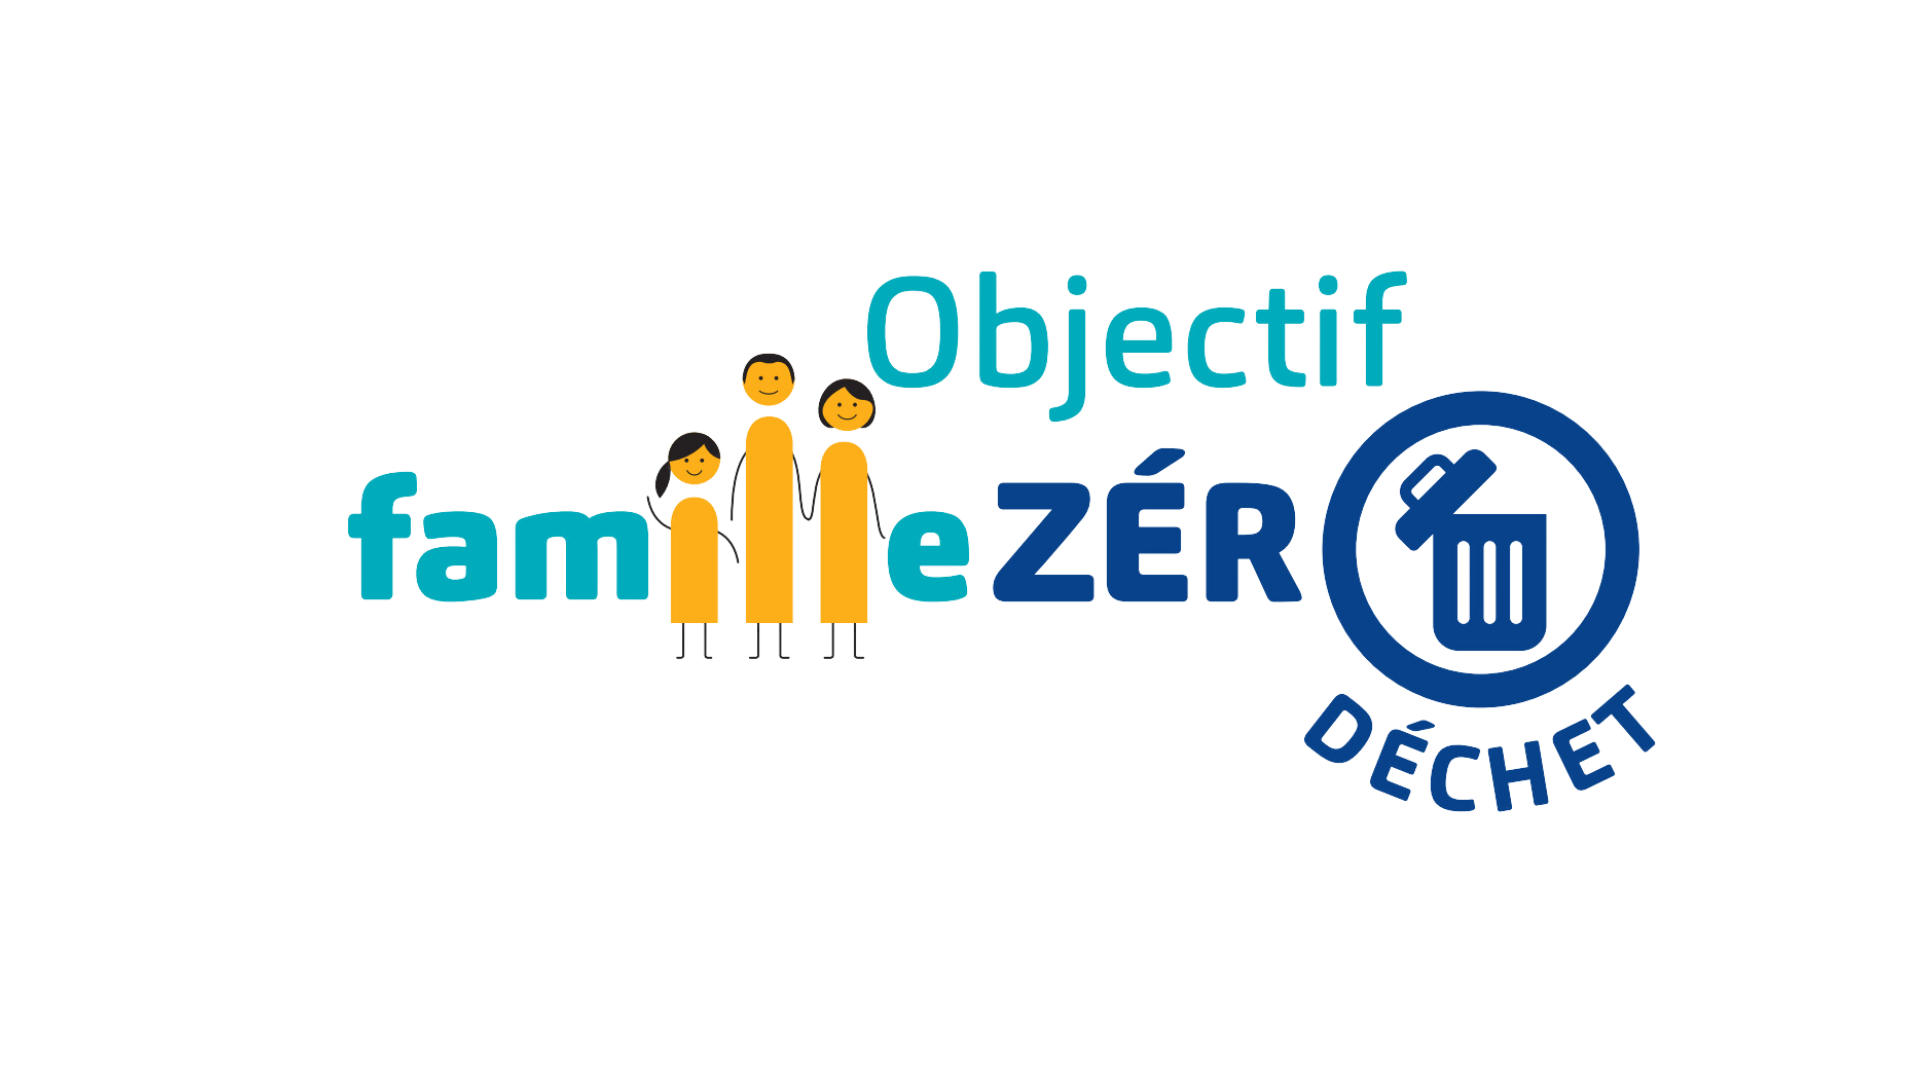 Objectif famille Zero déchet.png